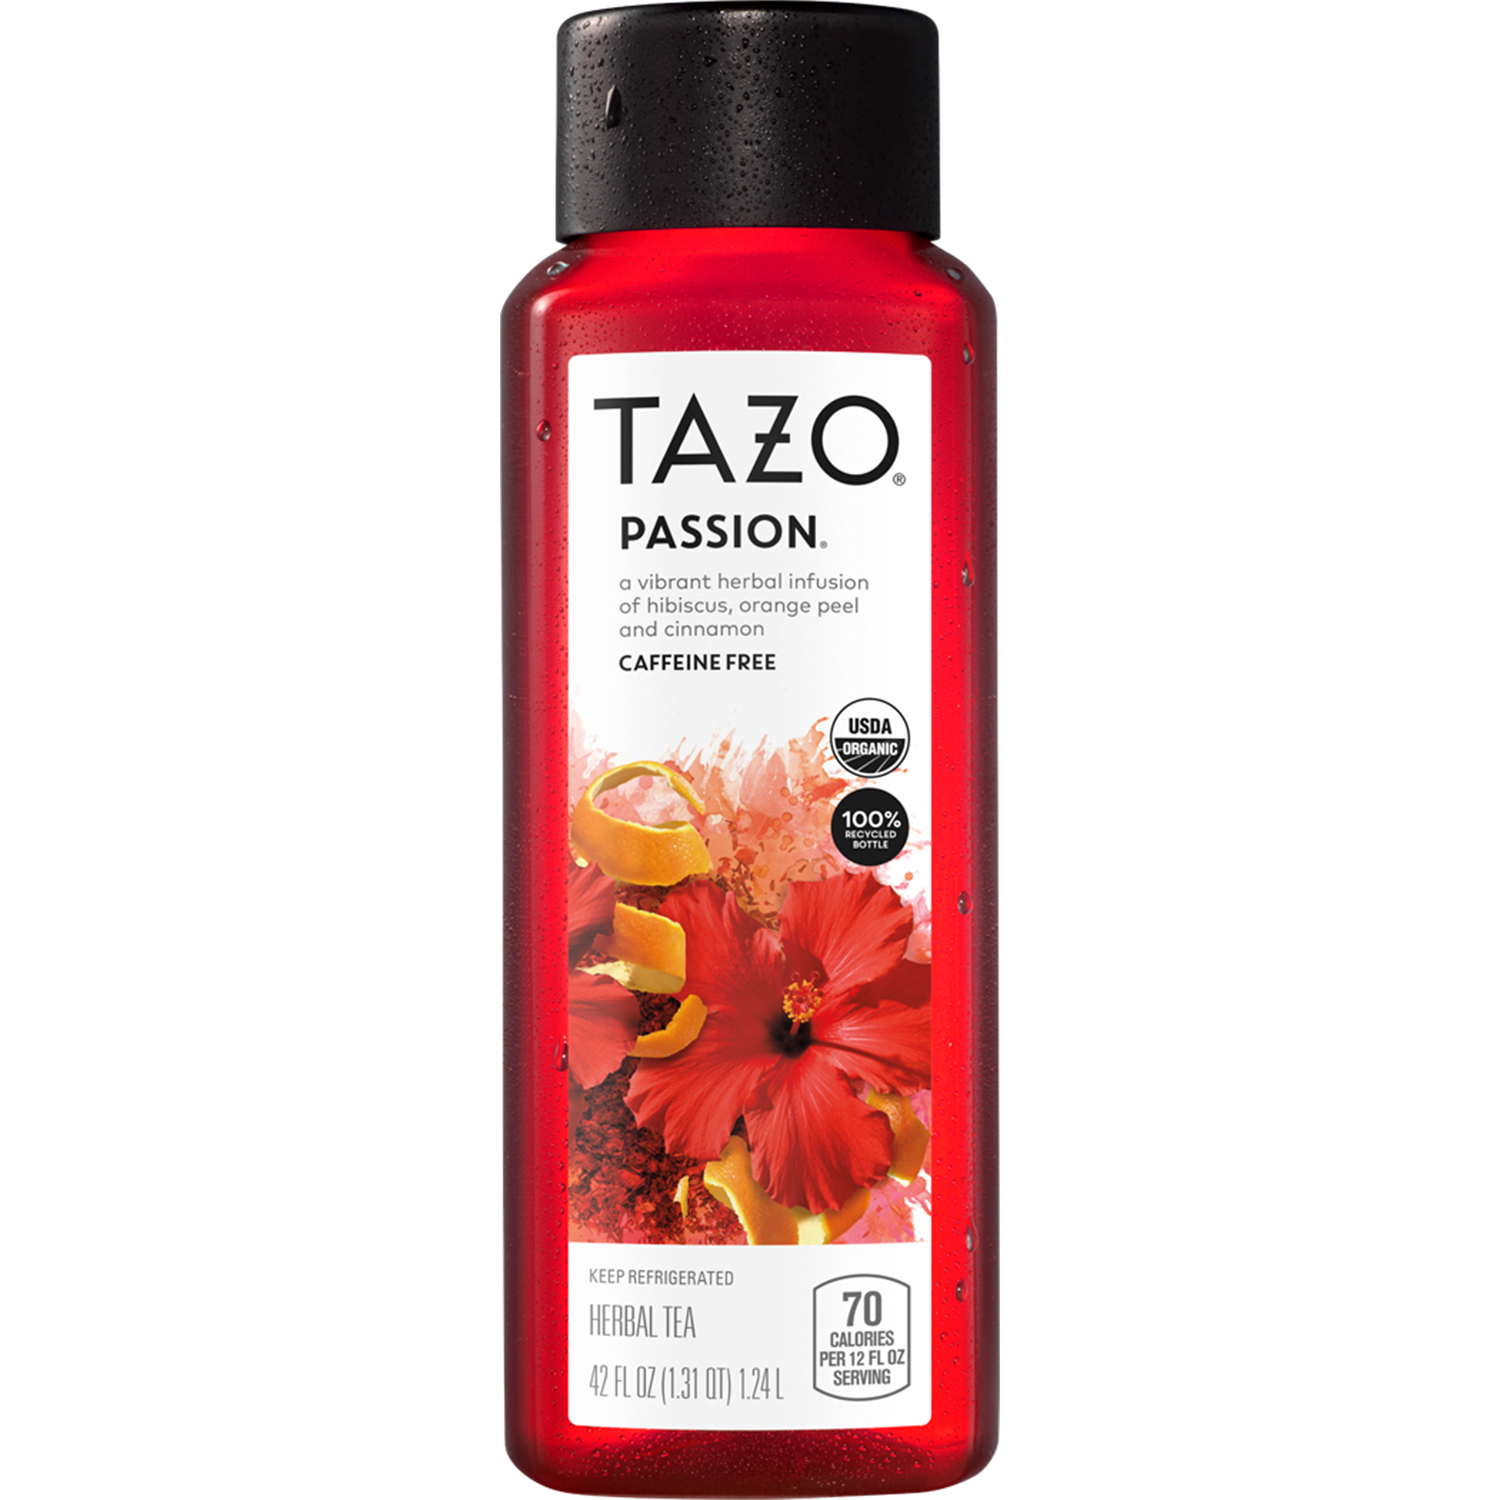 Tazo Products Crossword